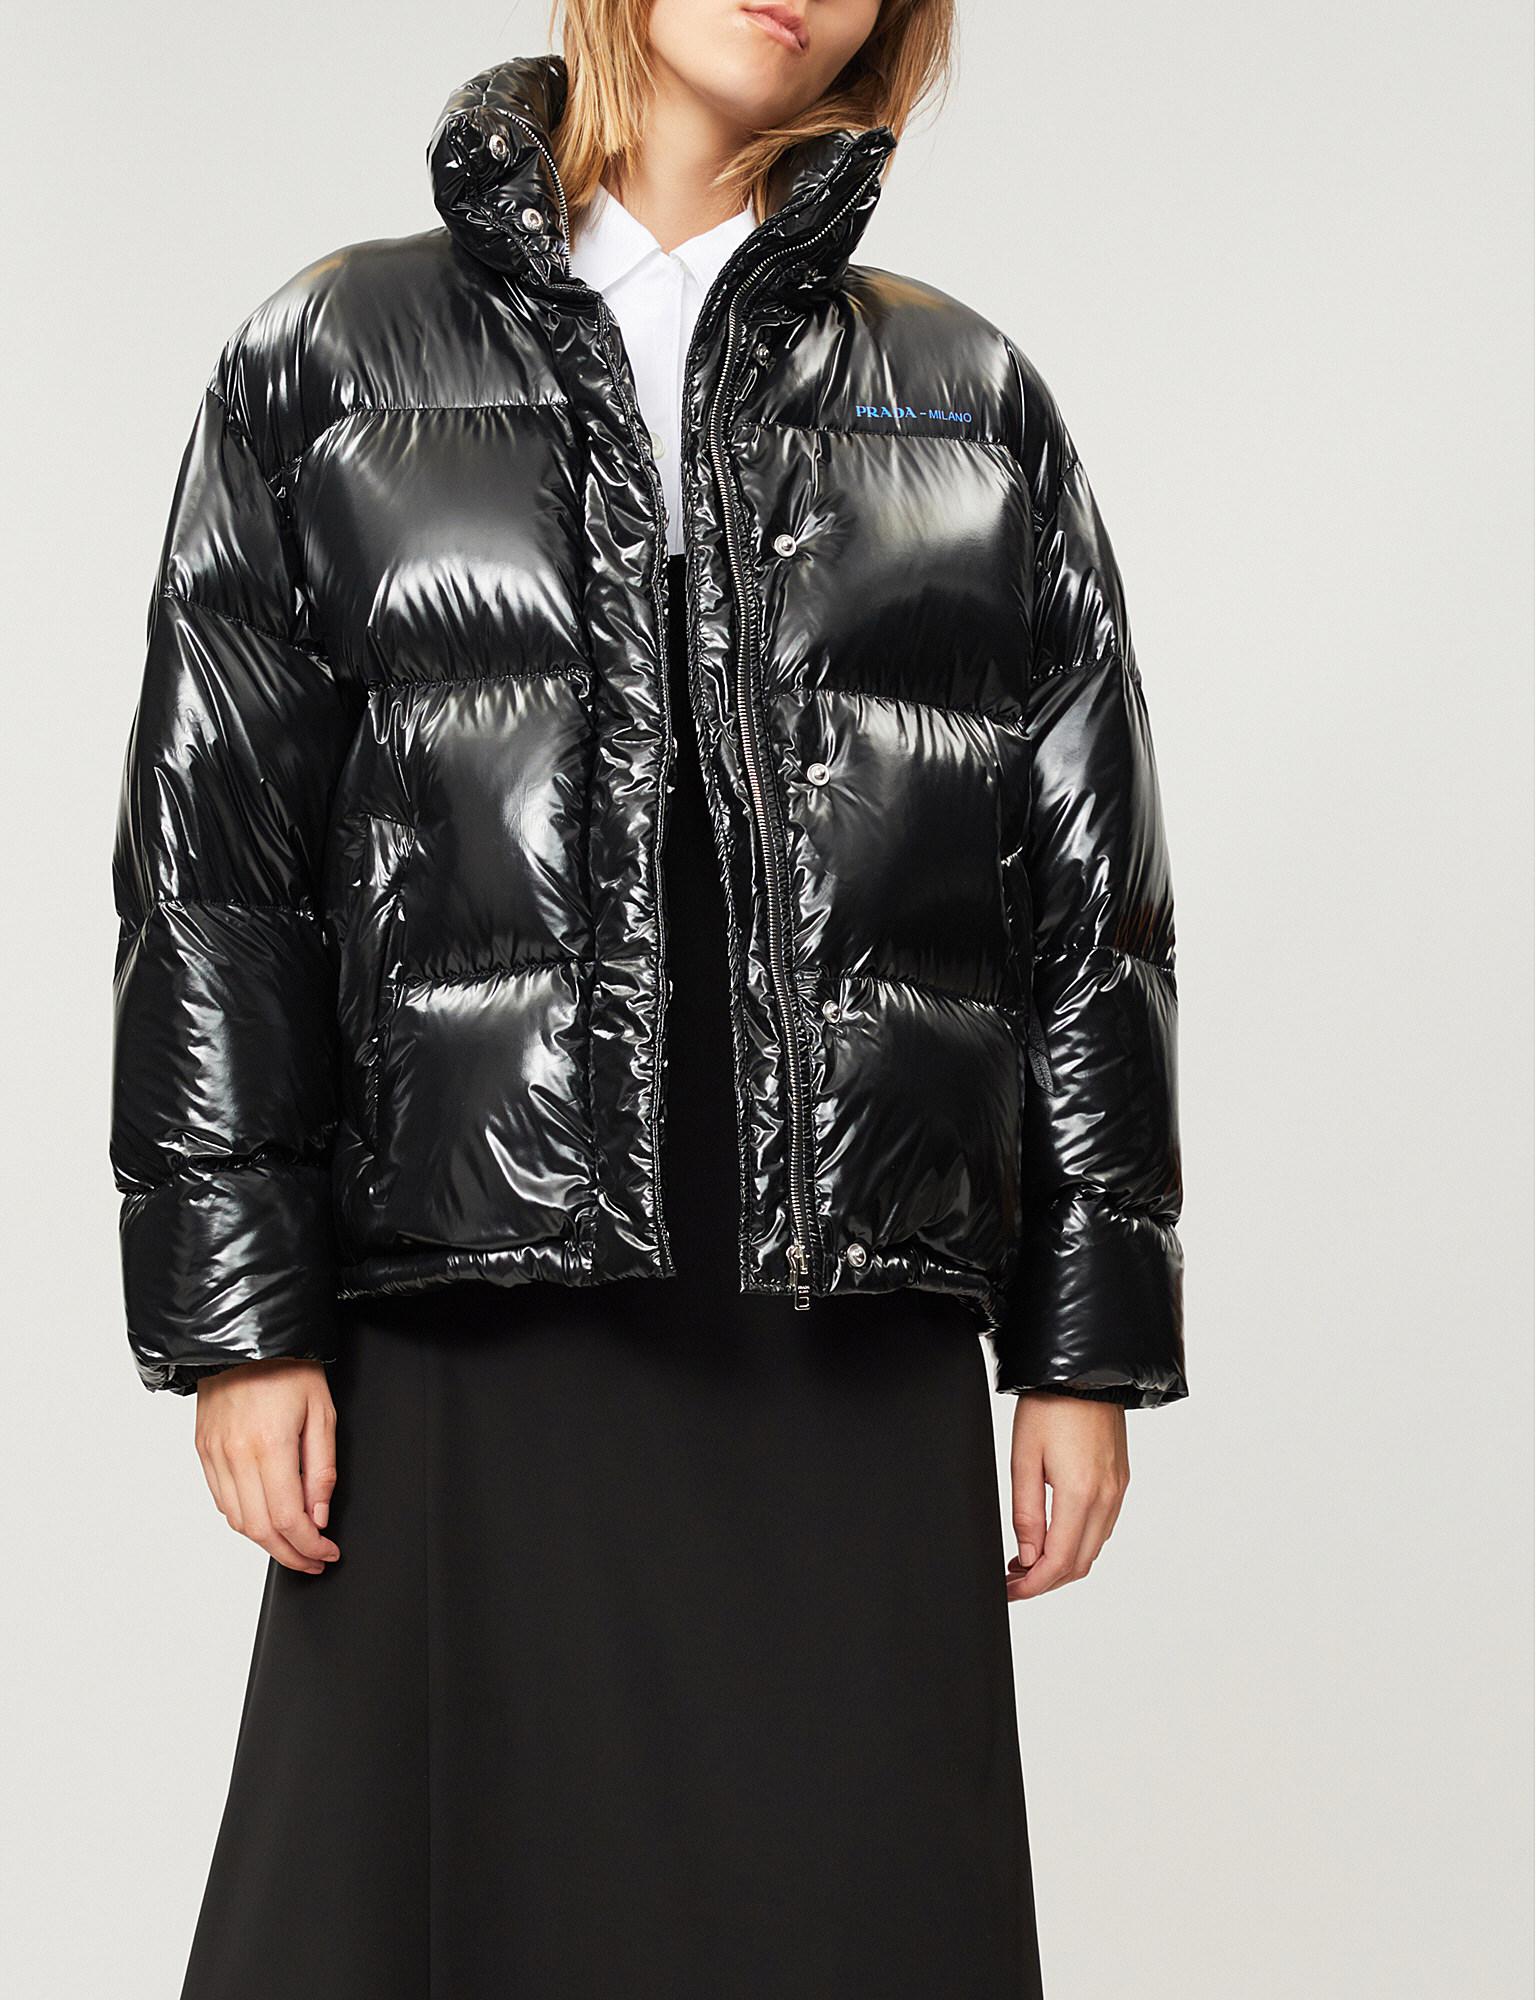 Prada Shiny Shell-down Puffer Jacket in Nero (Black) - Lyst